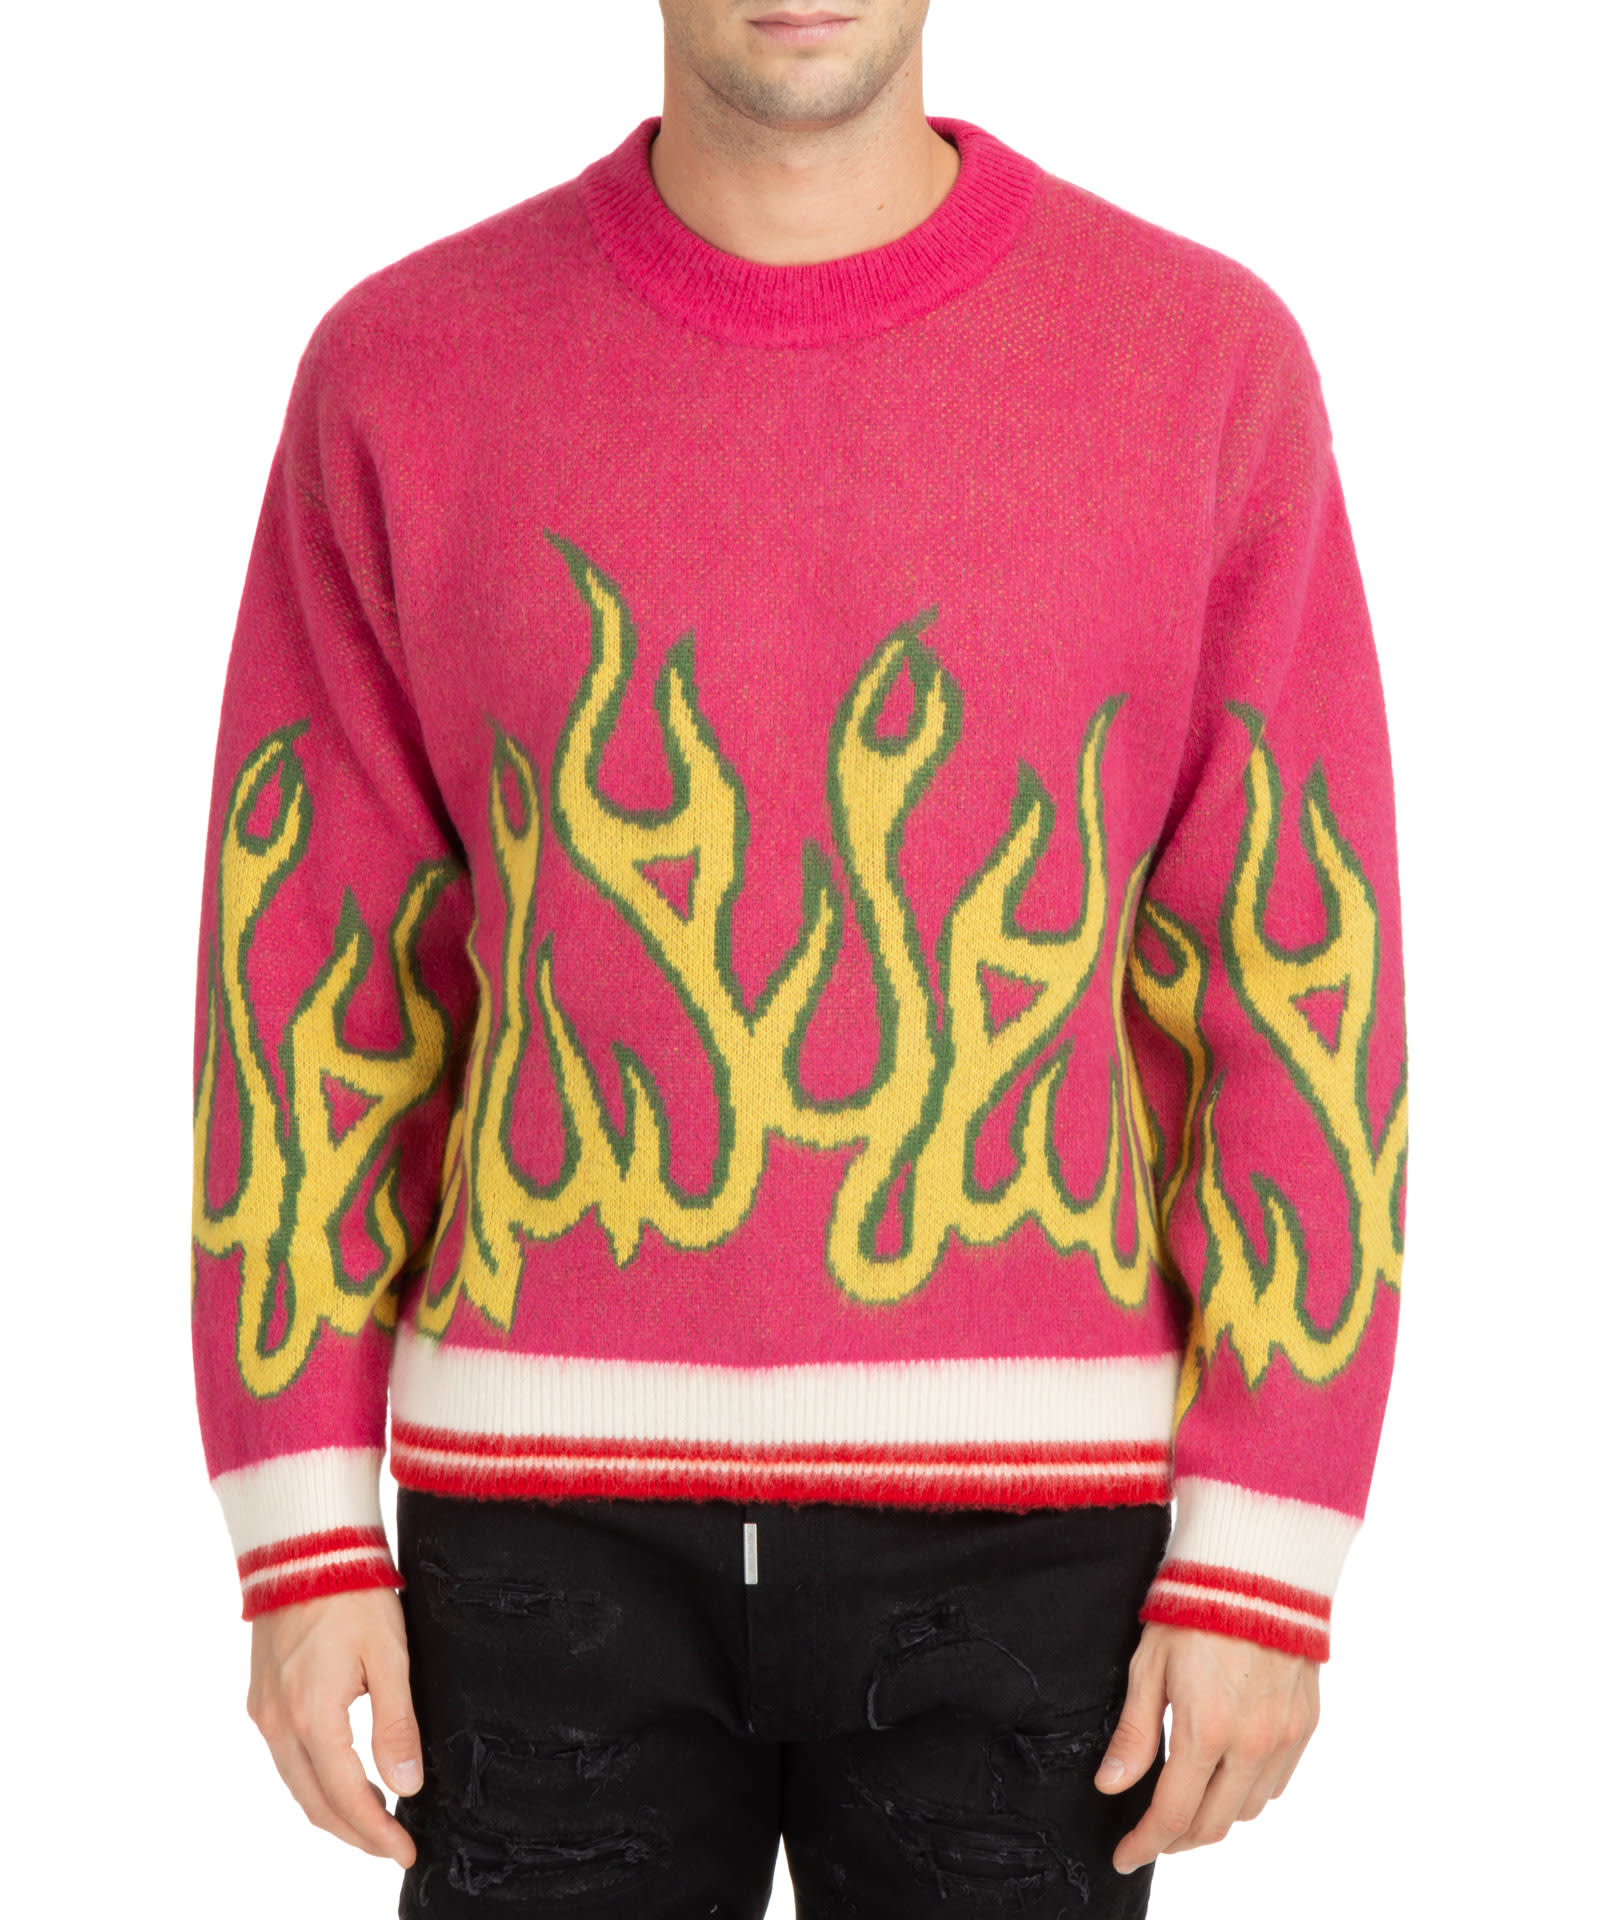 Palm Angels Burning Sweater